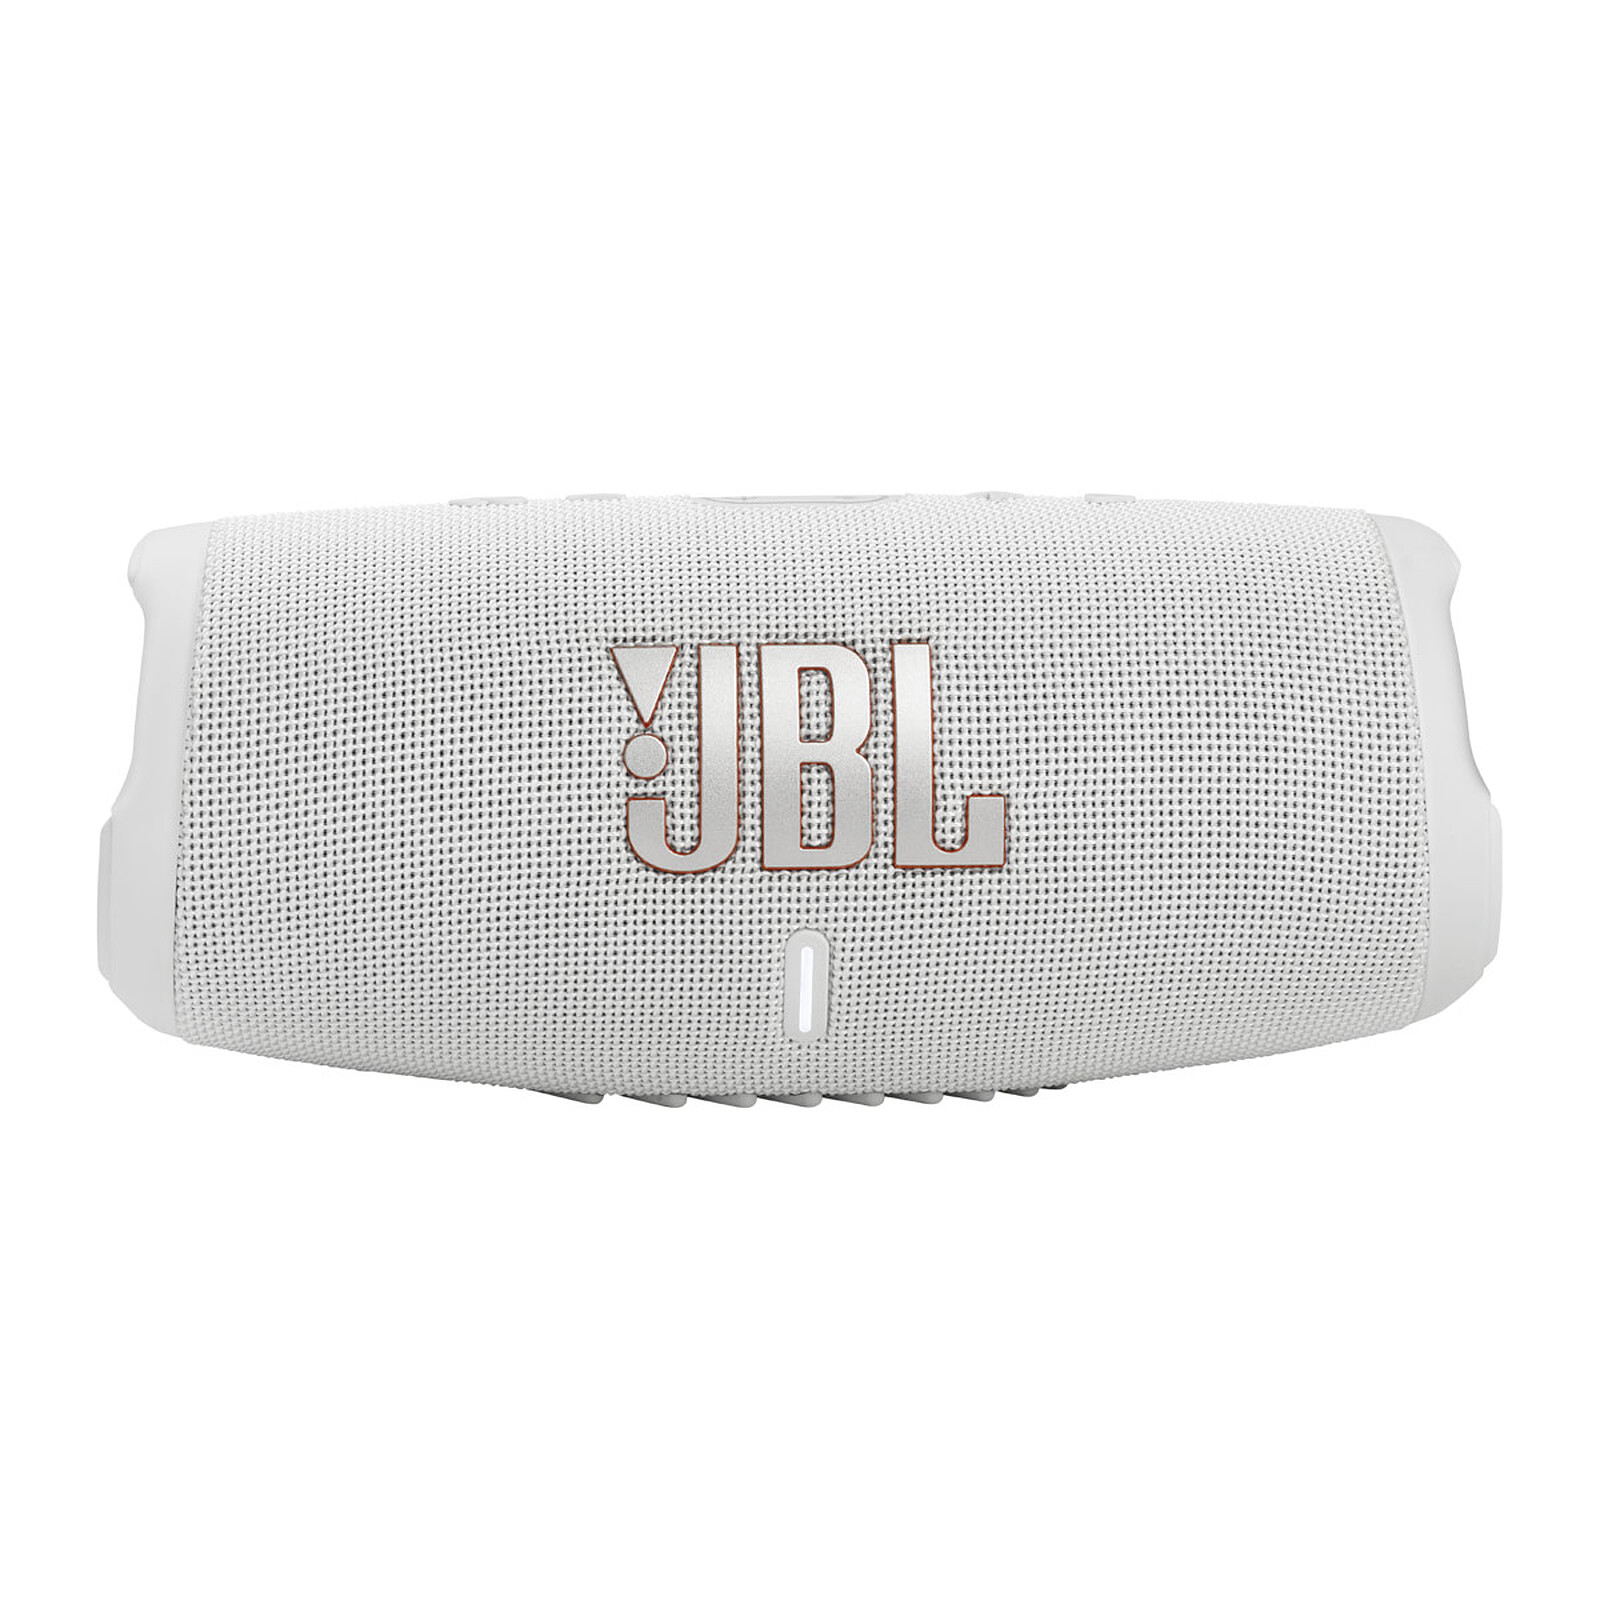 Enceinte Bluetooth JBL Charge 5 - Camouflage - Enceinte